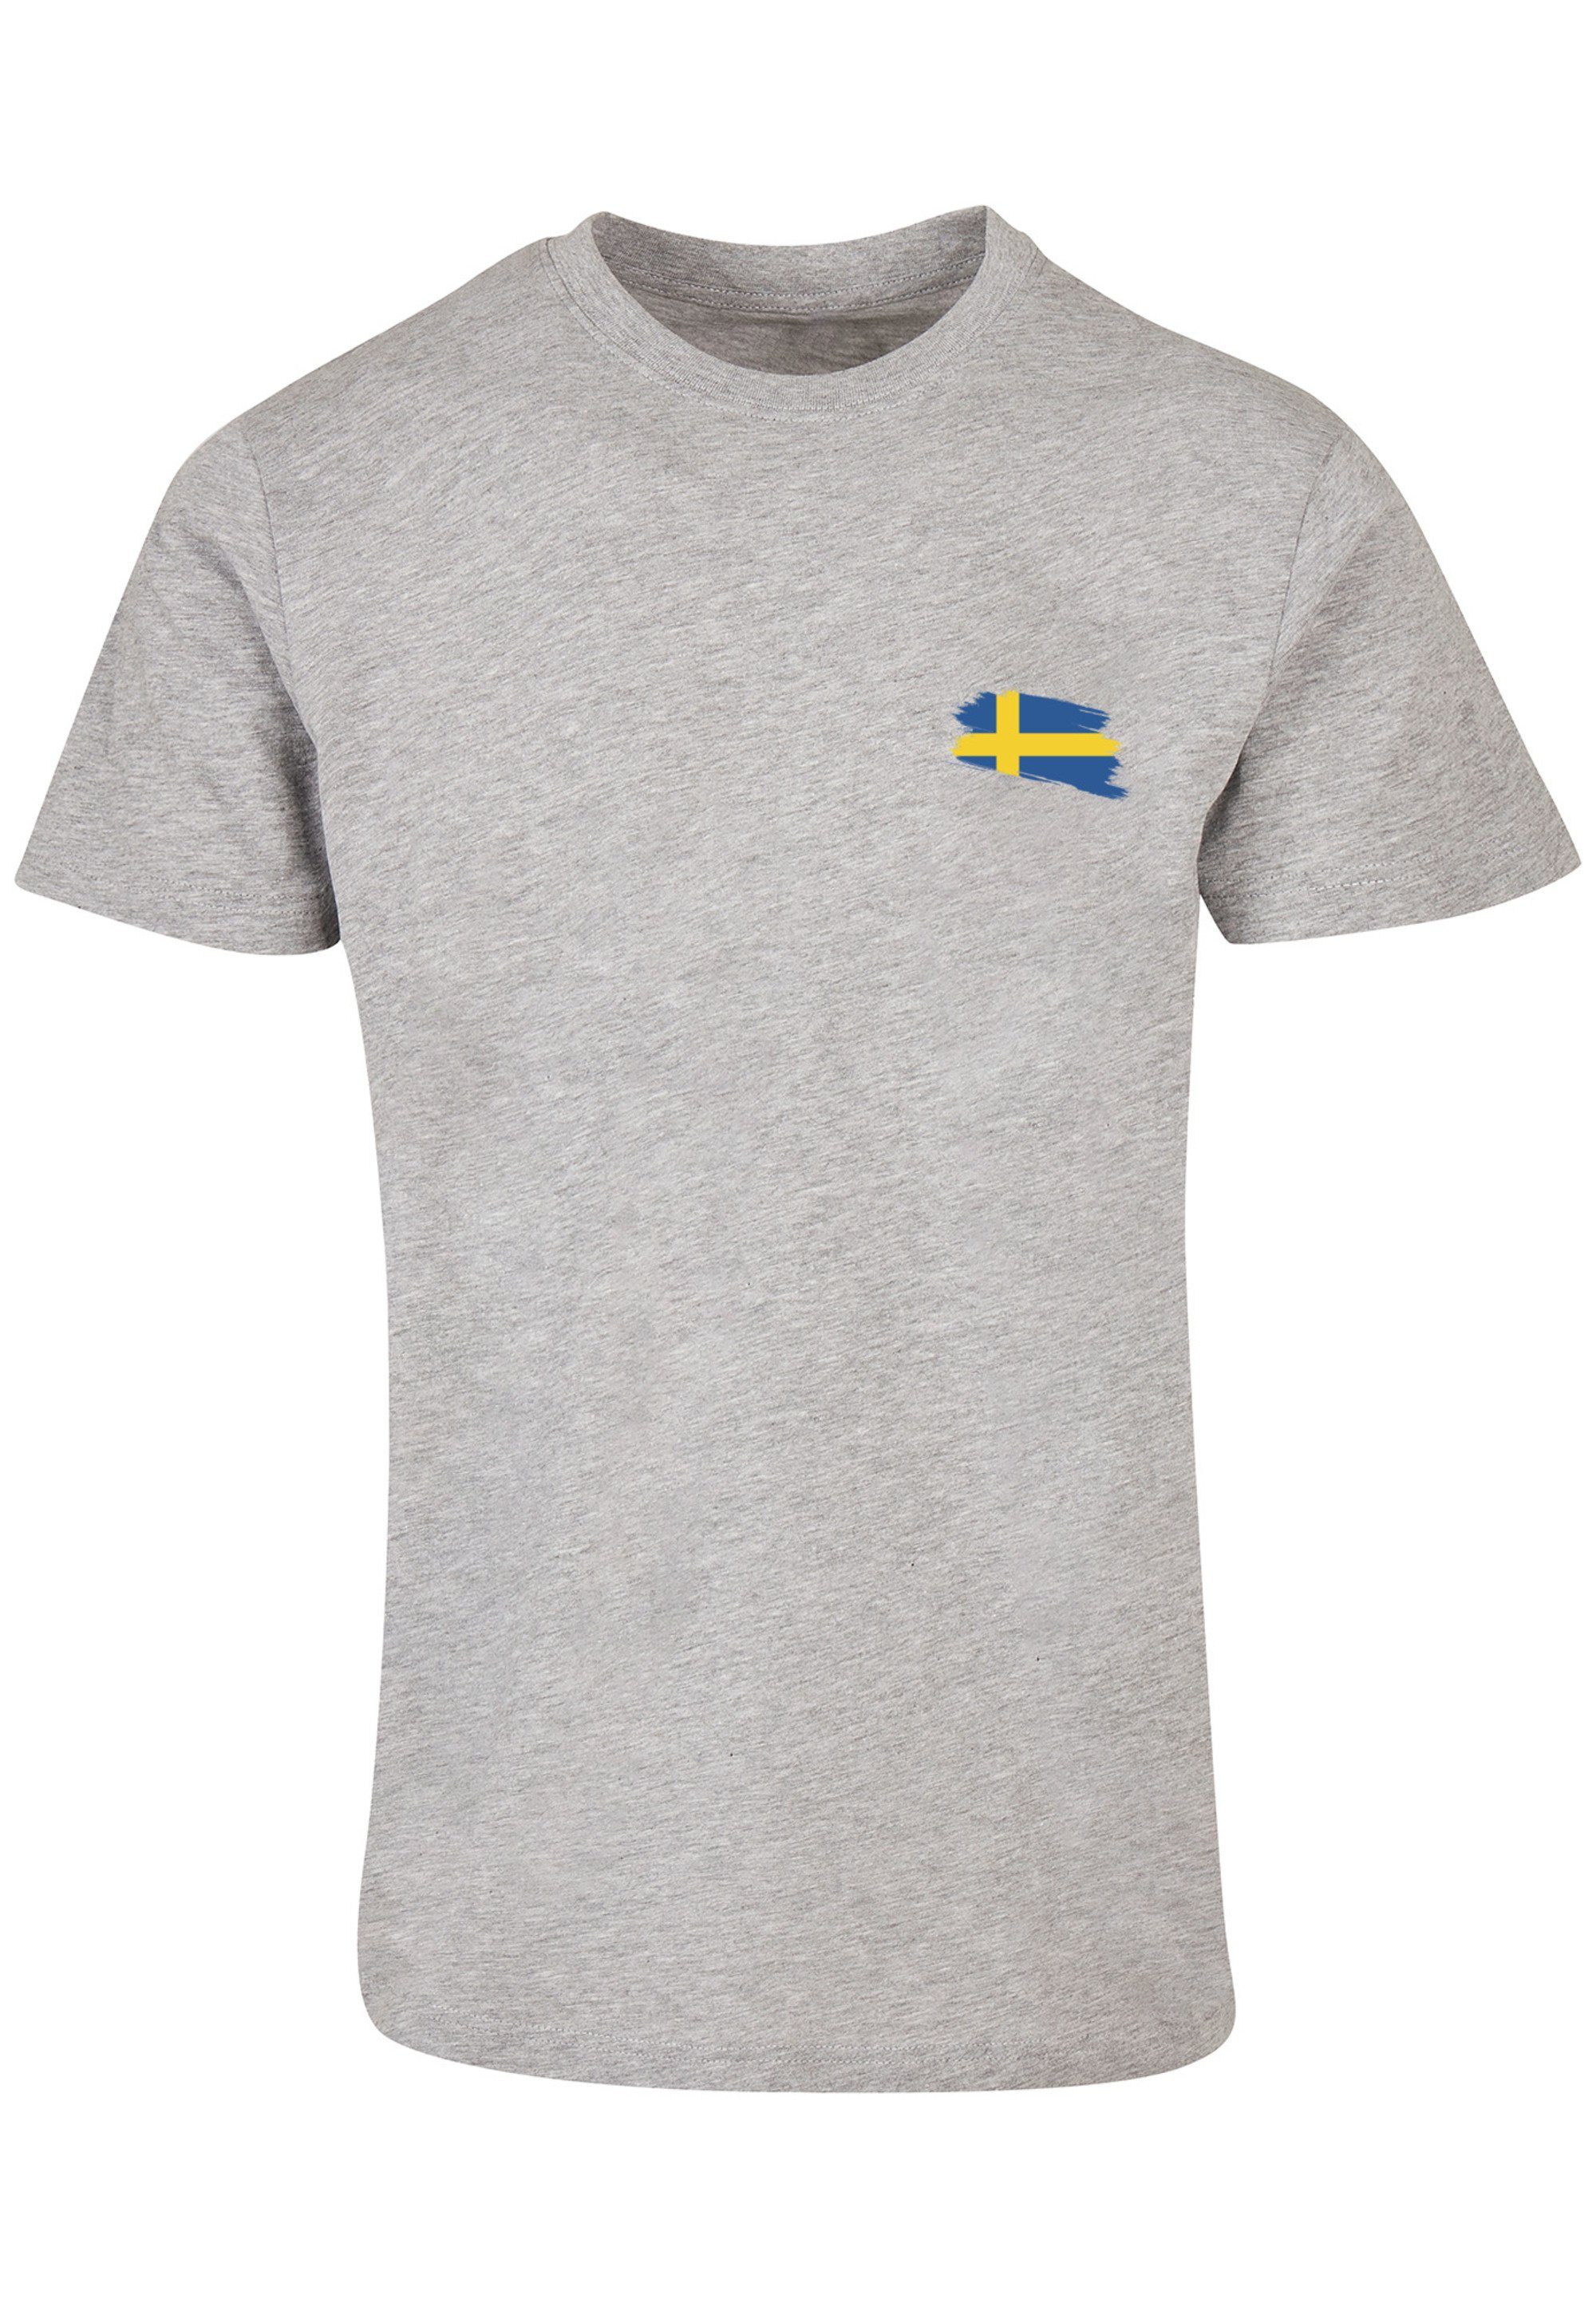 F4NT4STIC T-Shirt Schweden grey Print Sweden Flagge heather